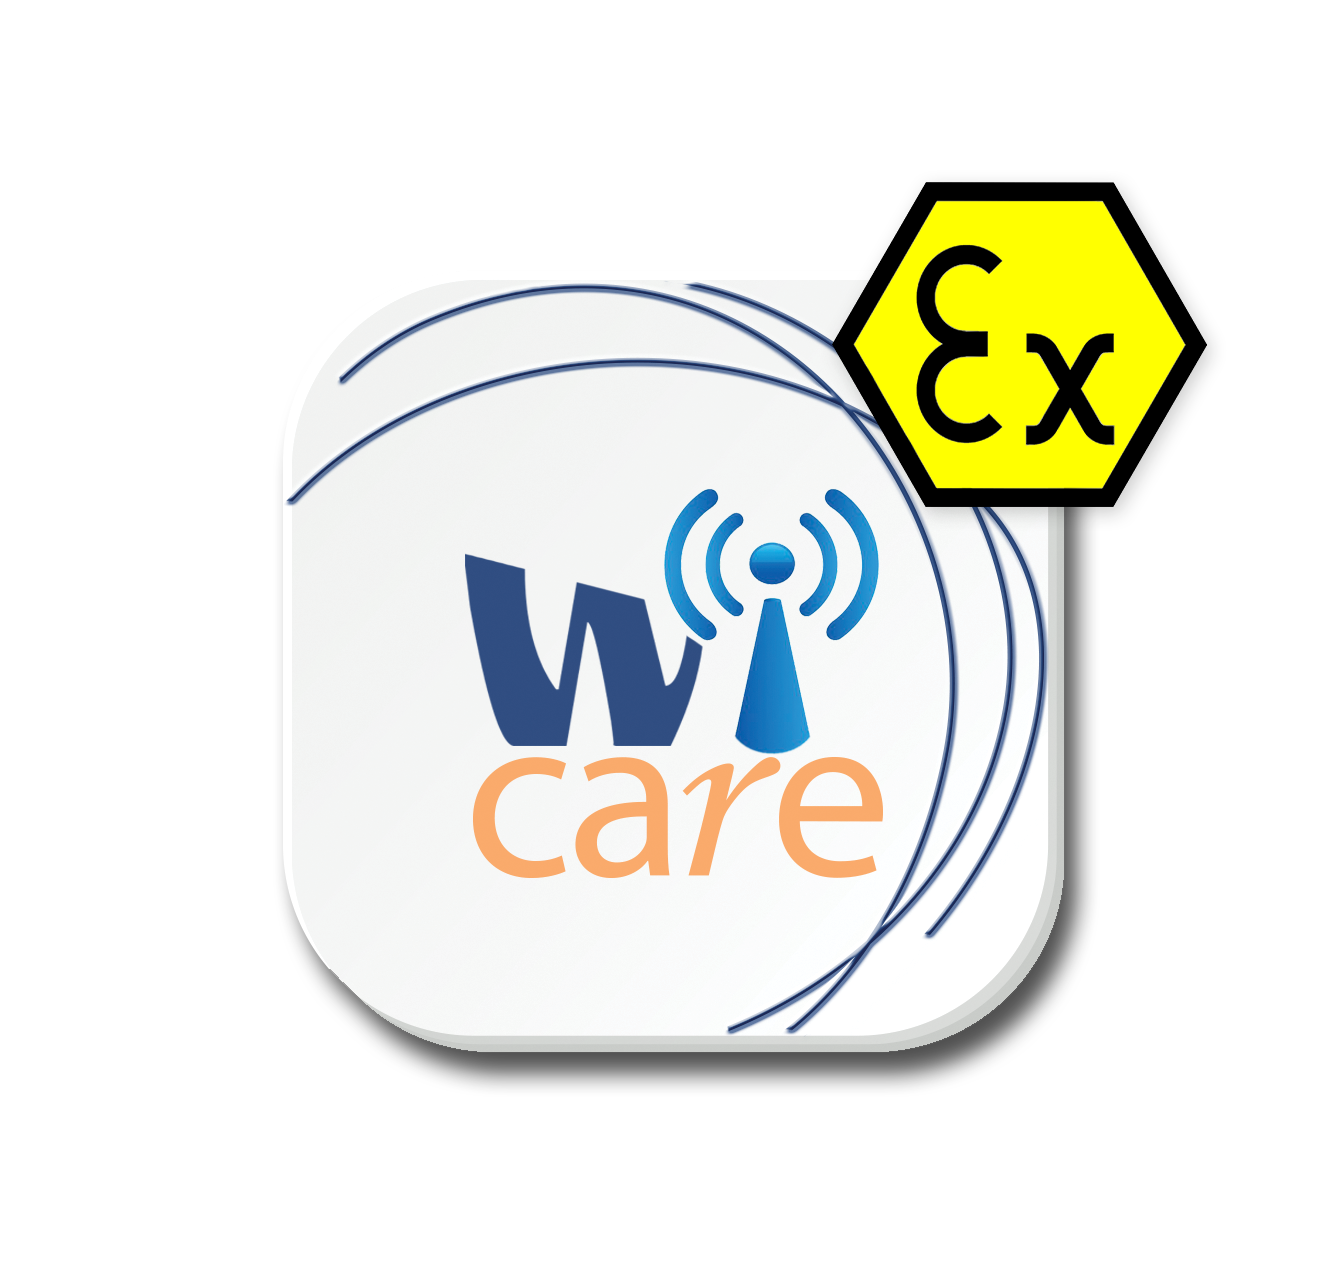 Wi-care_logo-Atex